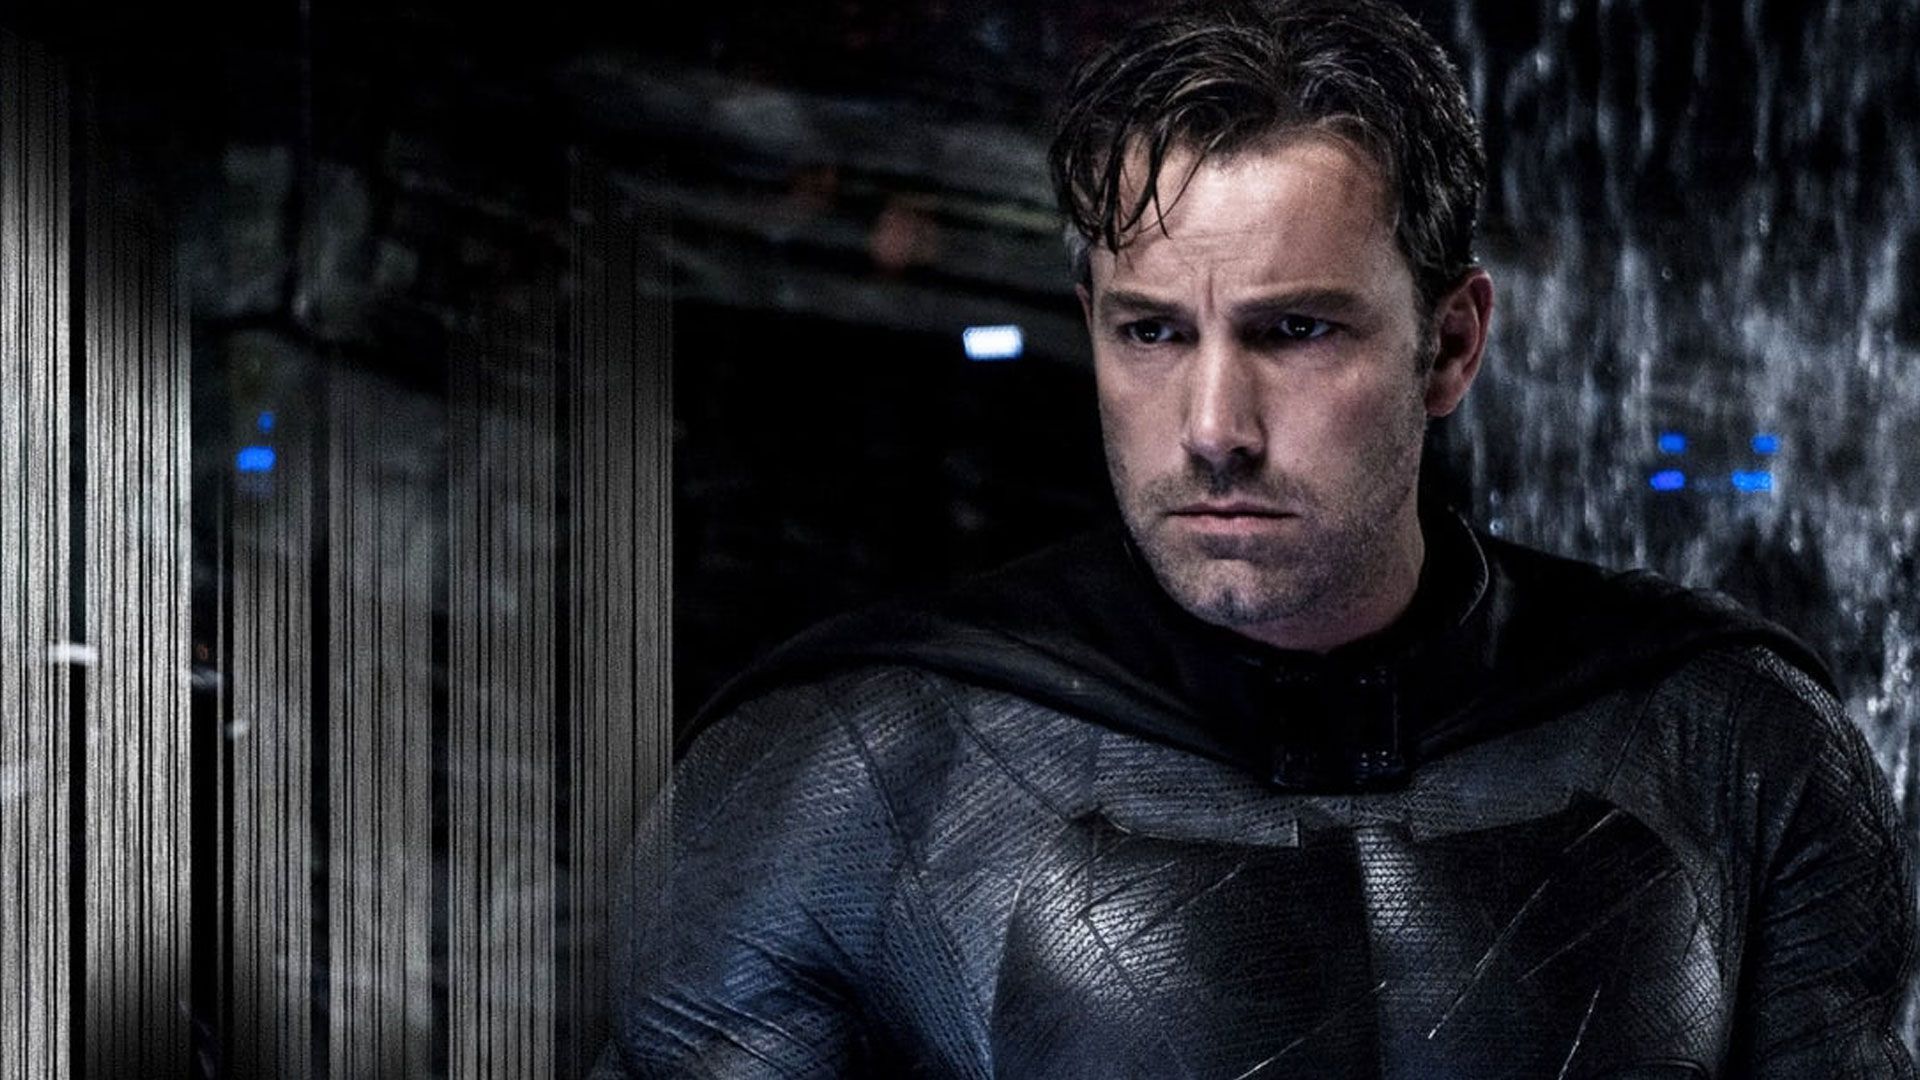 Ben Affleck's Batman went wrong with Batfleck, and how DC